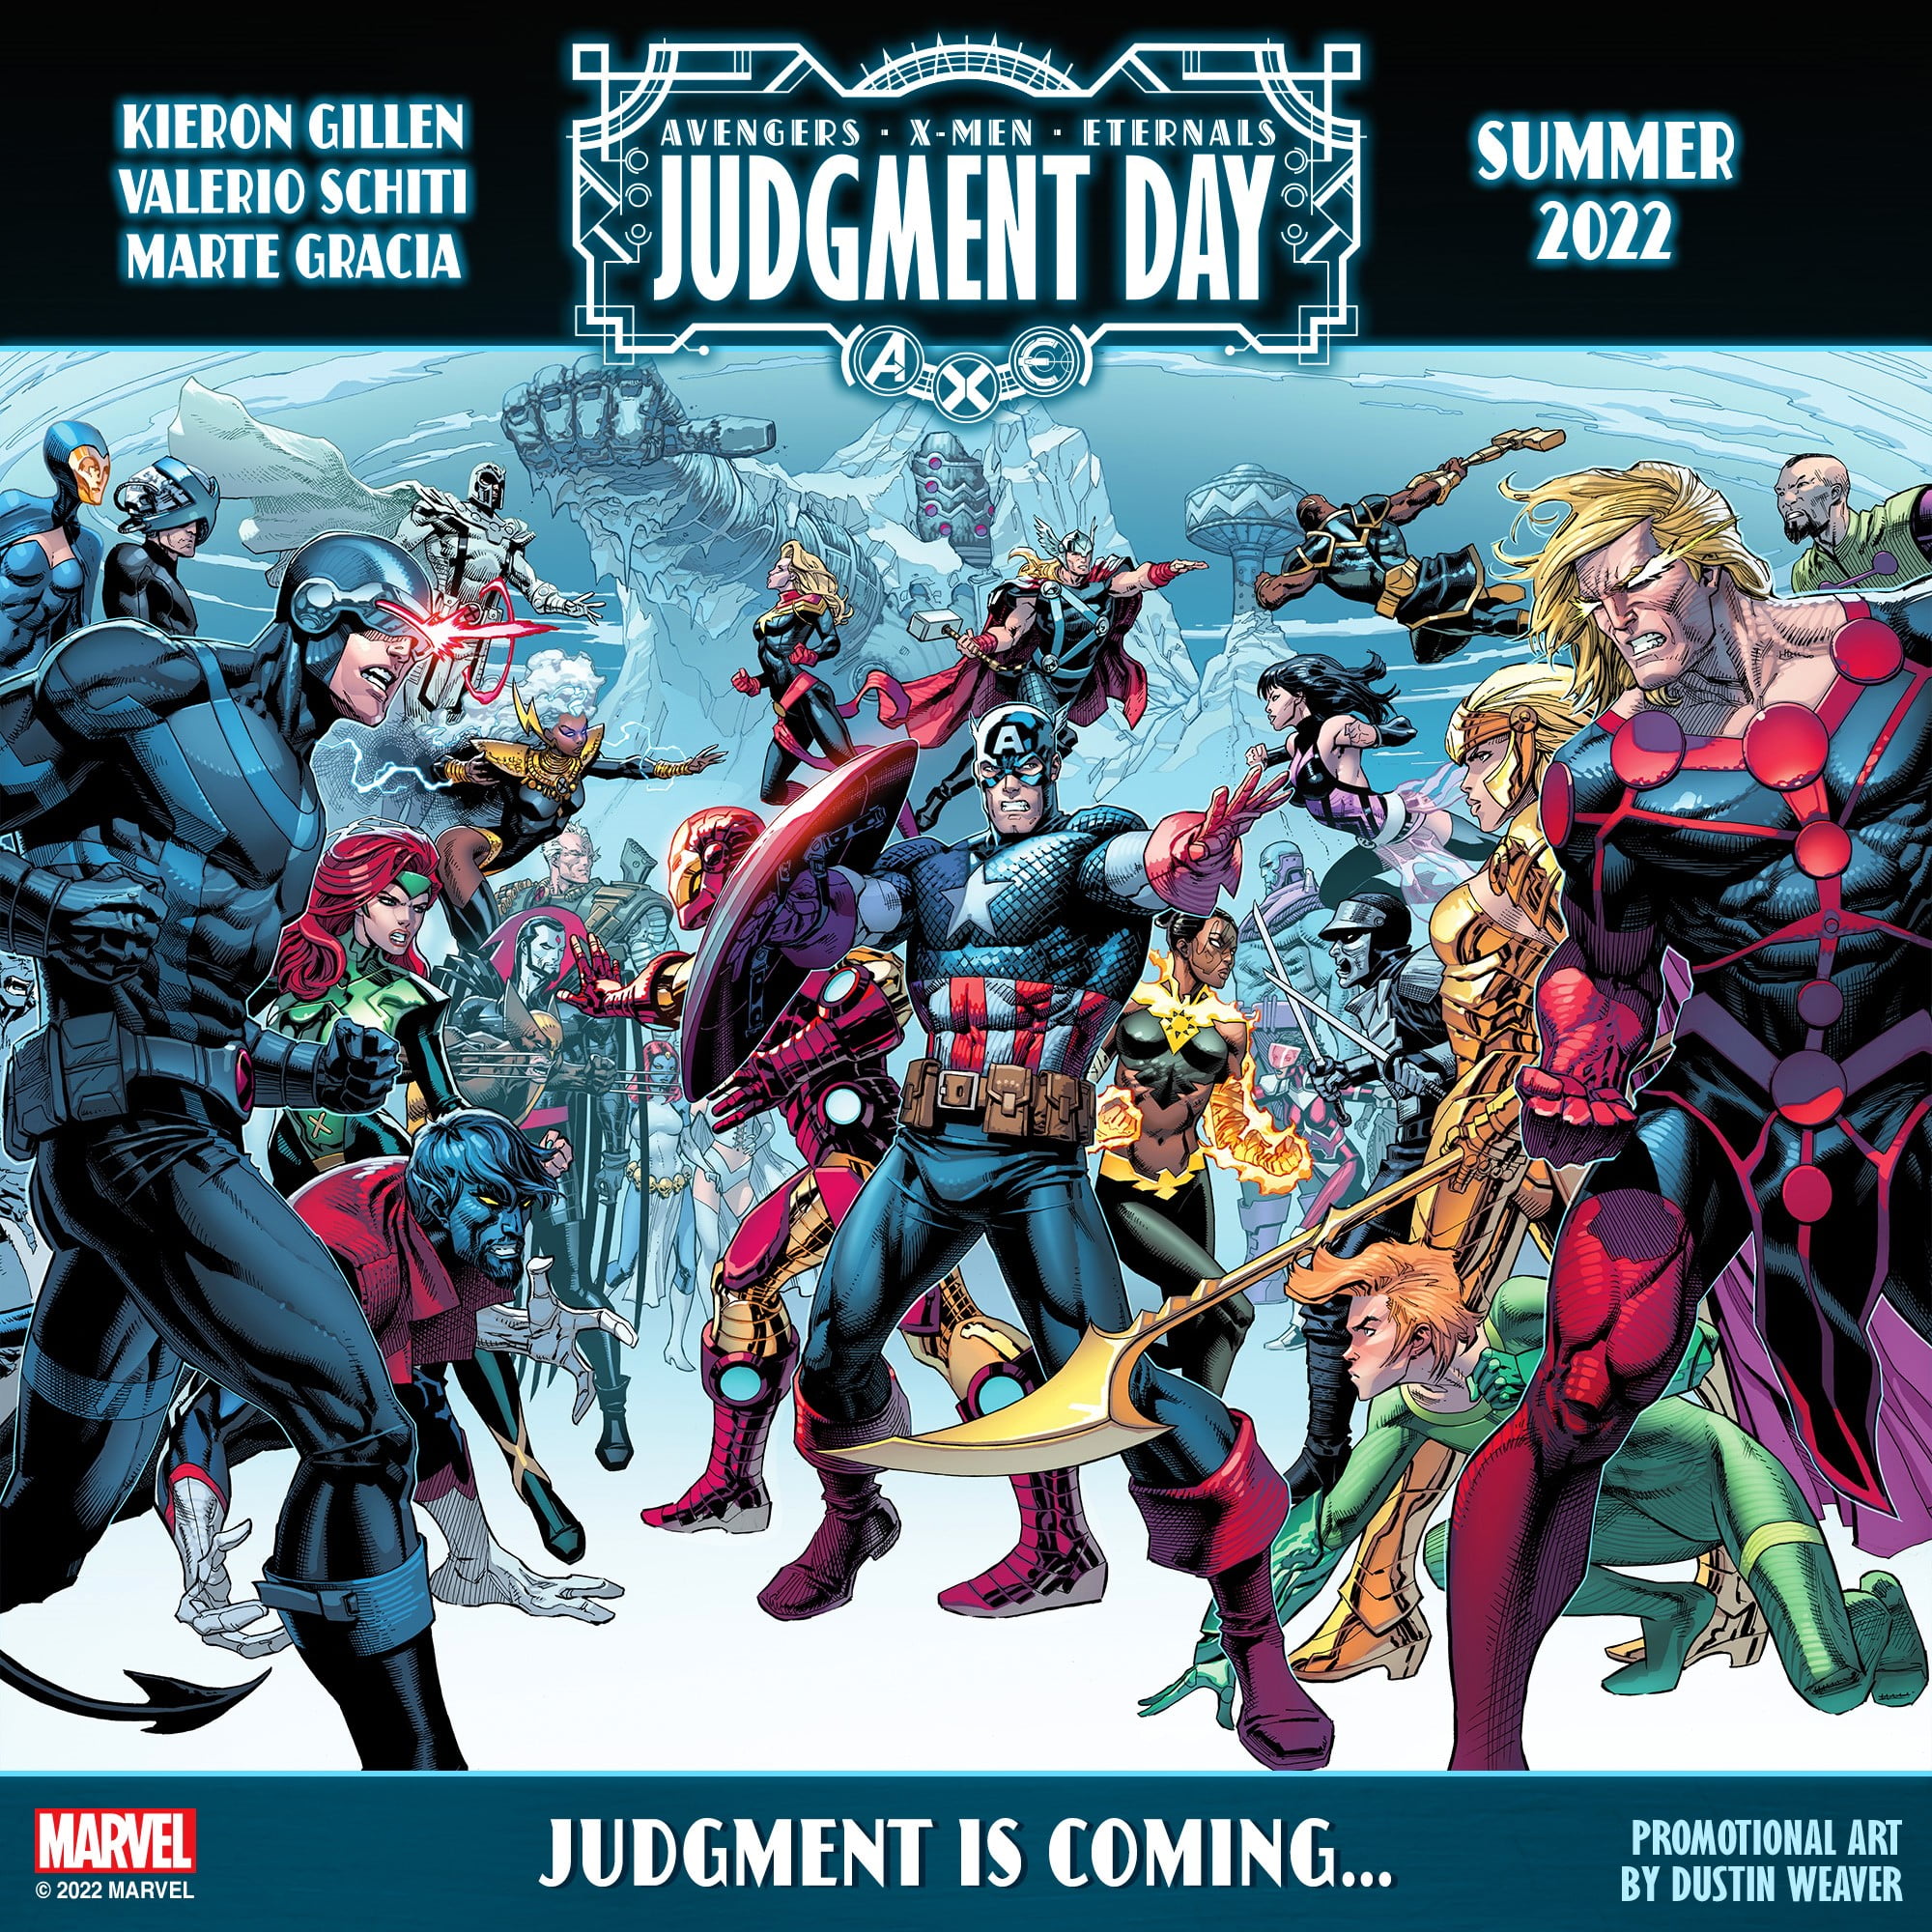 Marvel Judgment Day teaser photo via Anthony Blackwood for use by 360 MAGAZINE